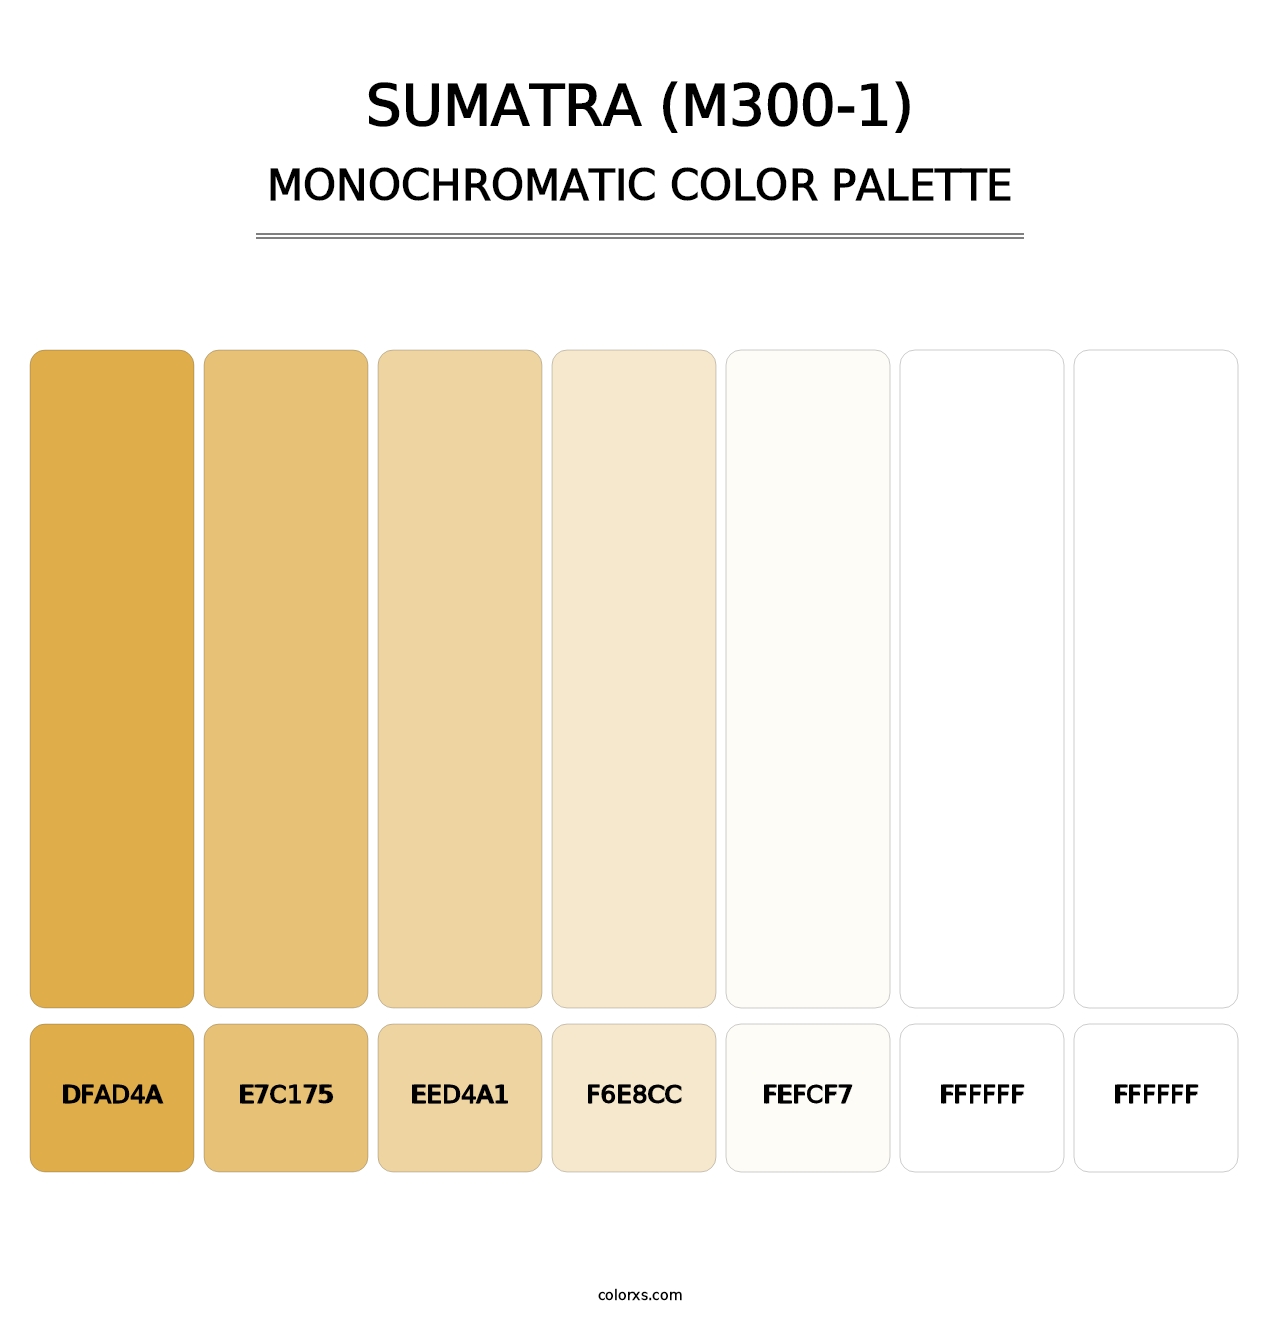 Sumatra (M300-1) - Monochromatic Color Palette